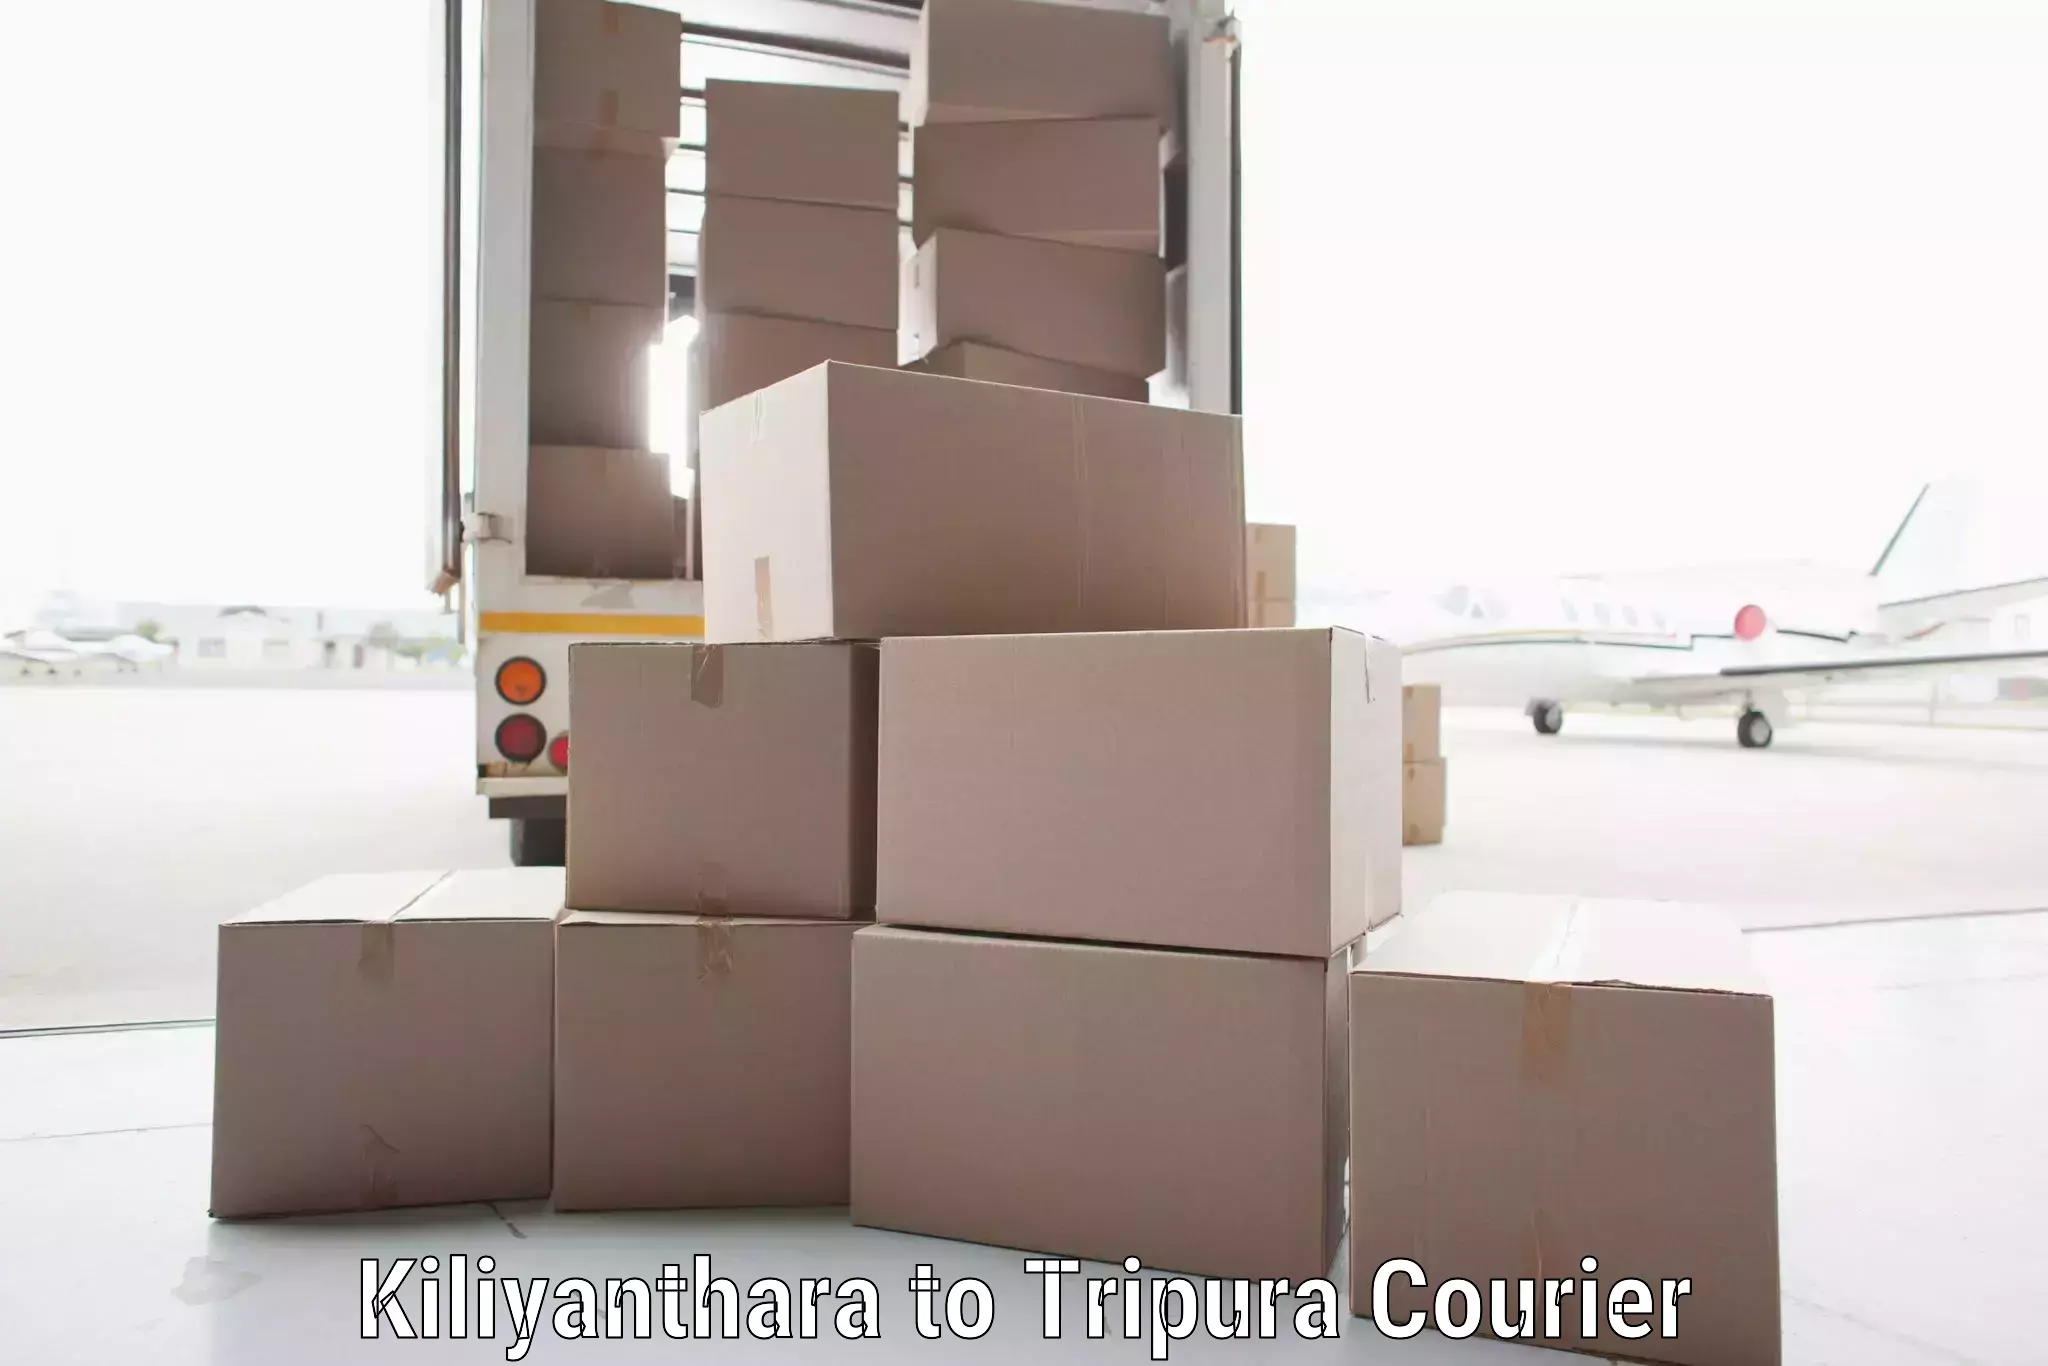 On-demand delivery in Kiliyanthara to Manu Bazar